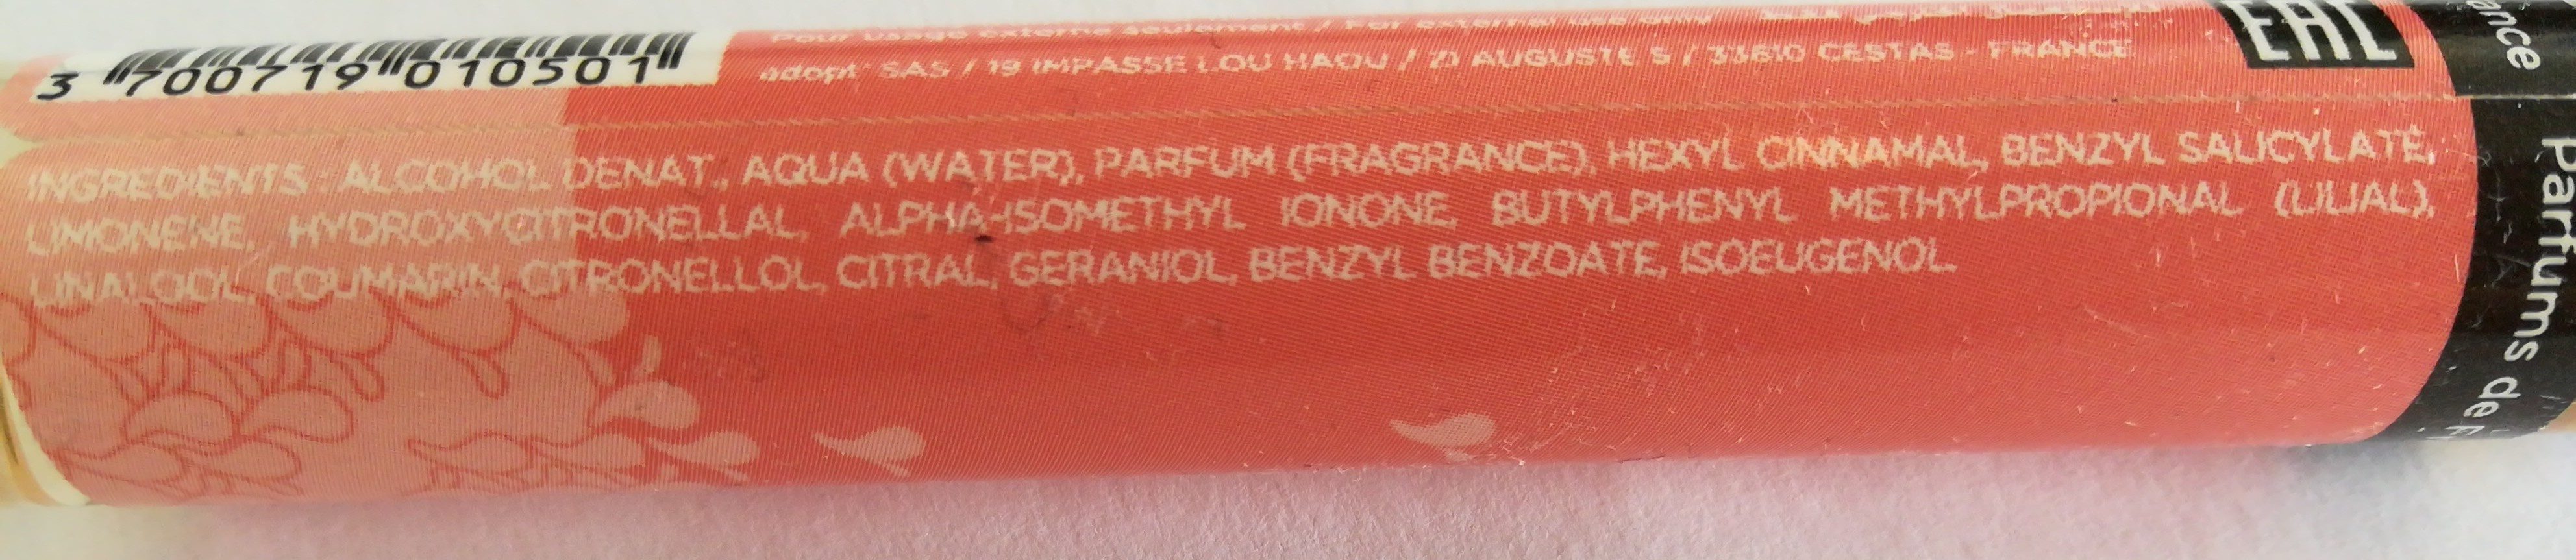 Parfum framboise fleur d'oranger - Ingredients - fr